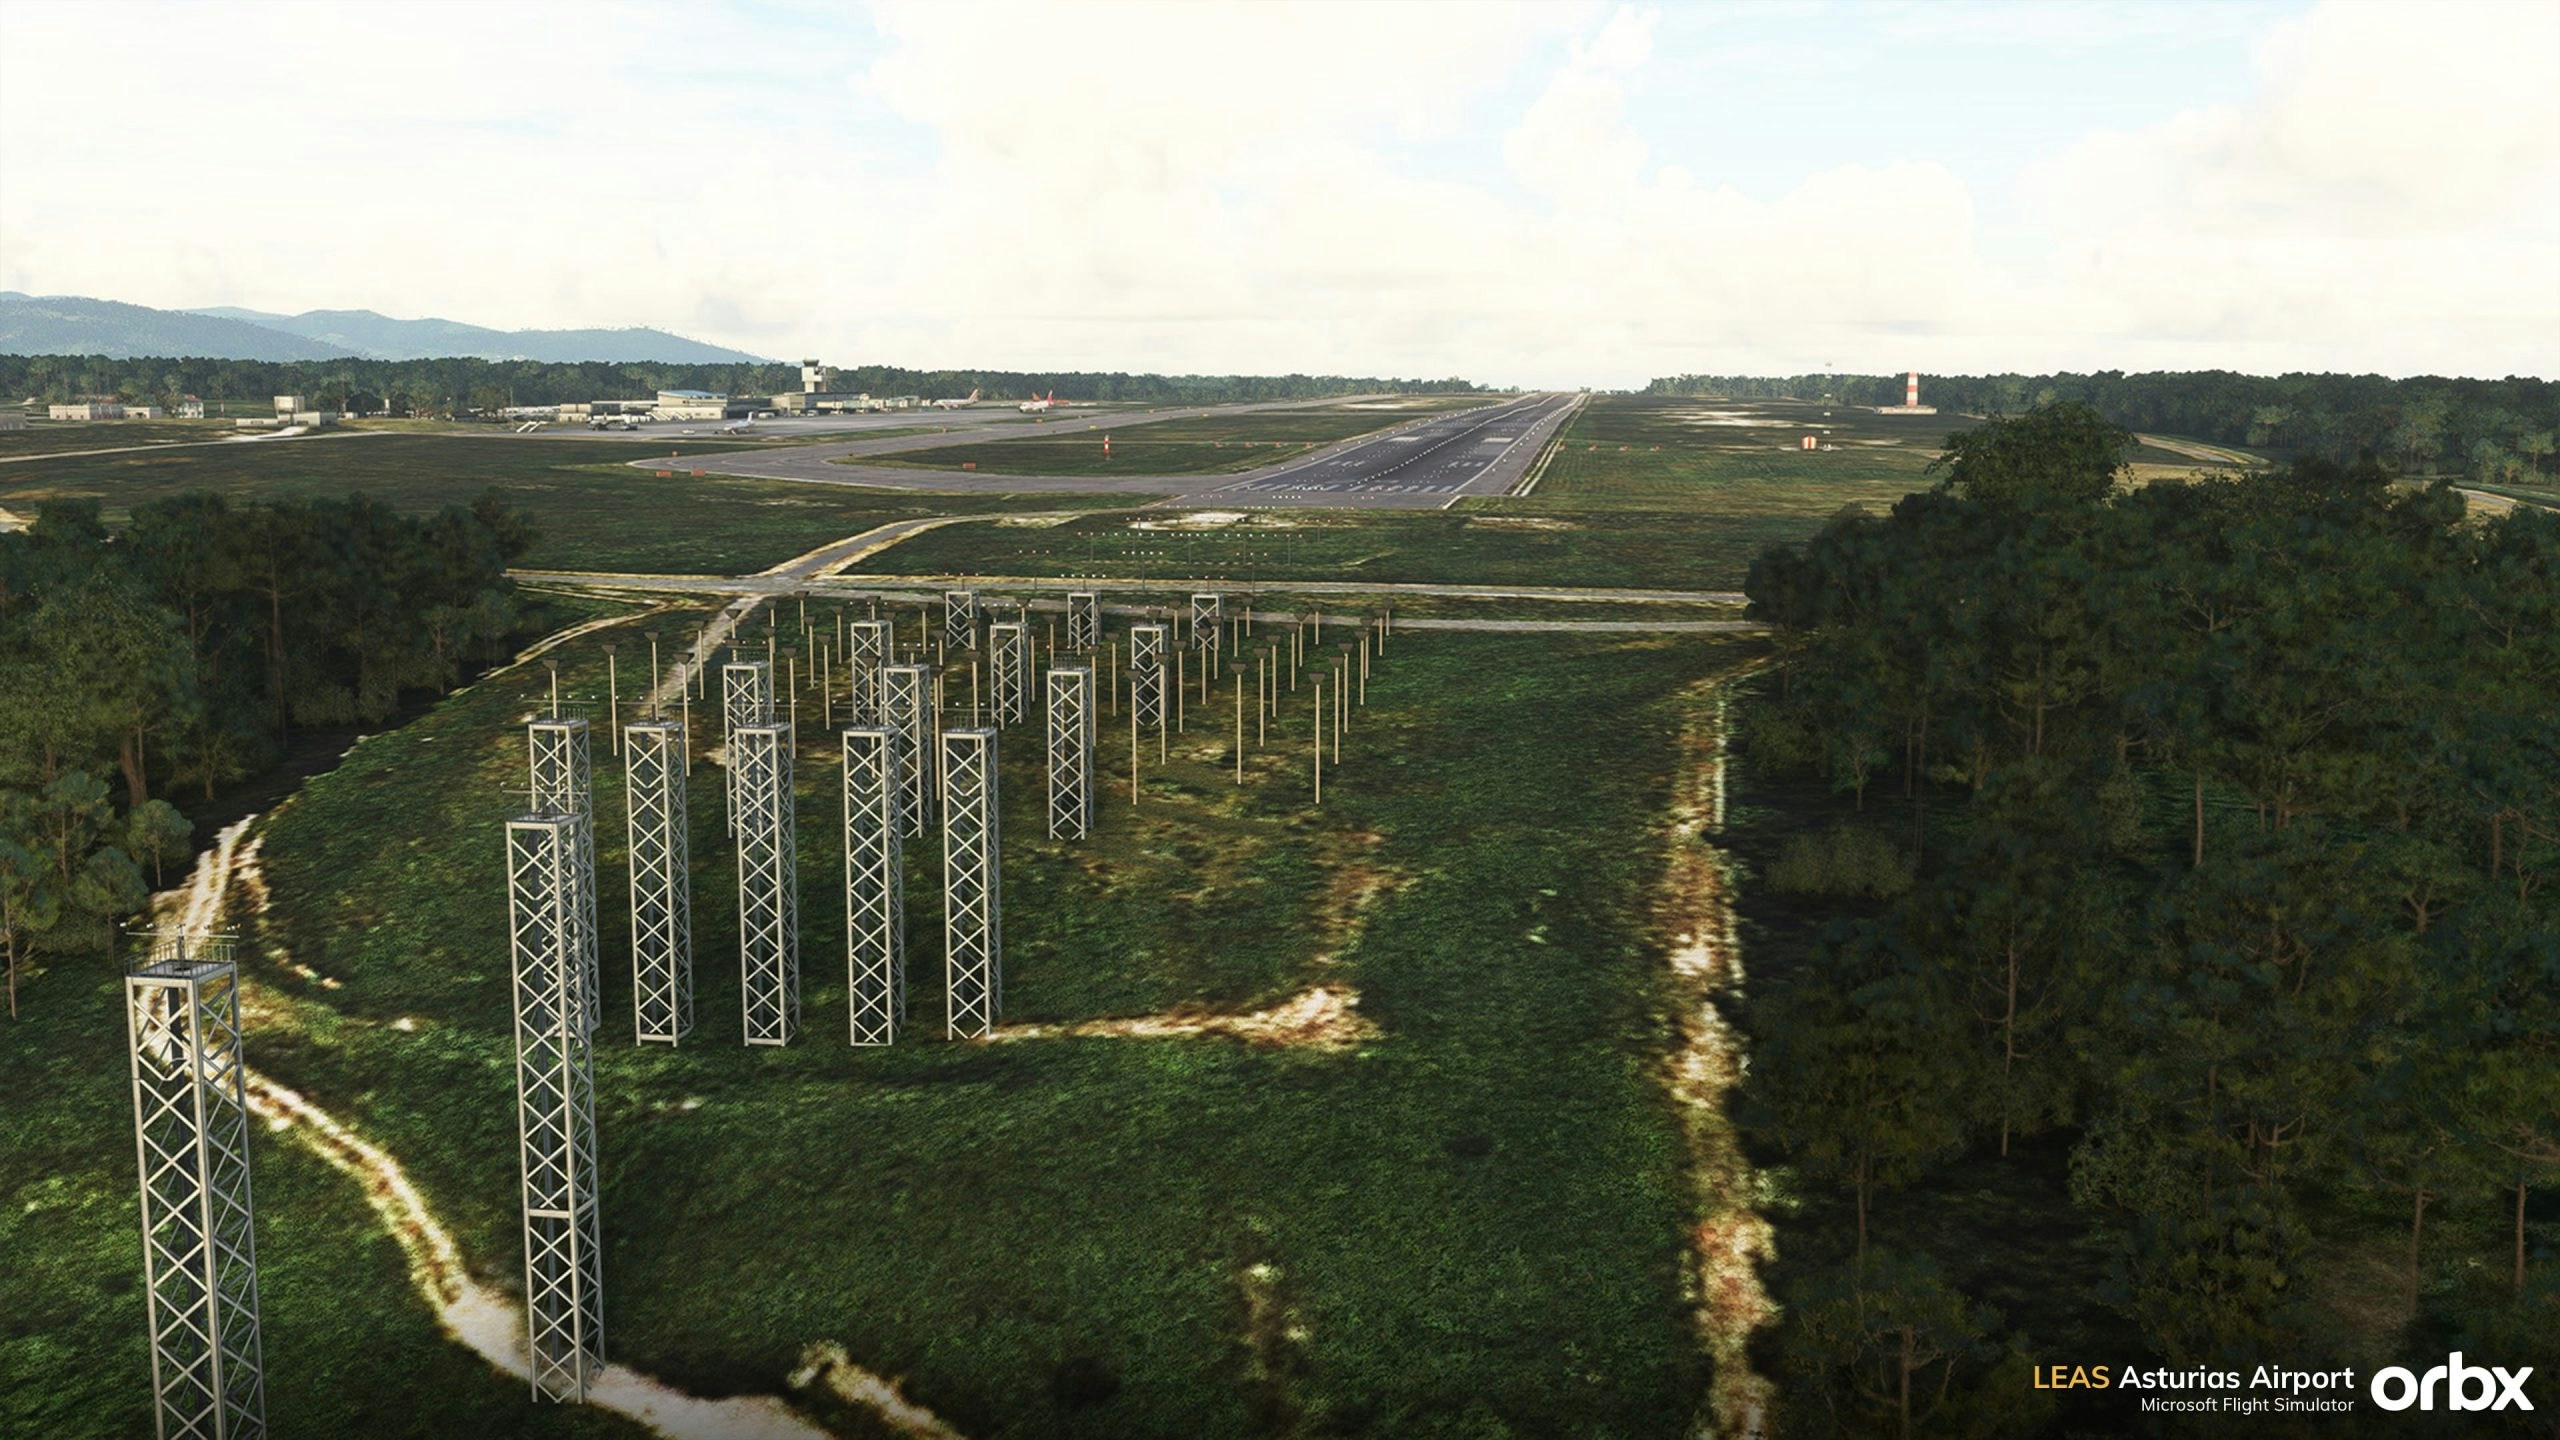 Orbx Announces Asturias Airport for MSFS